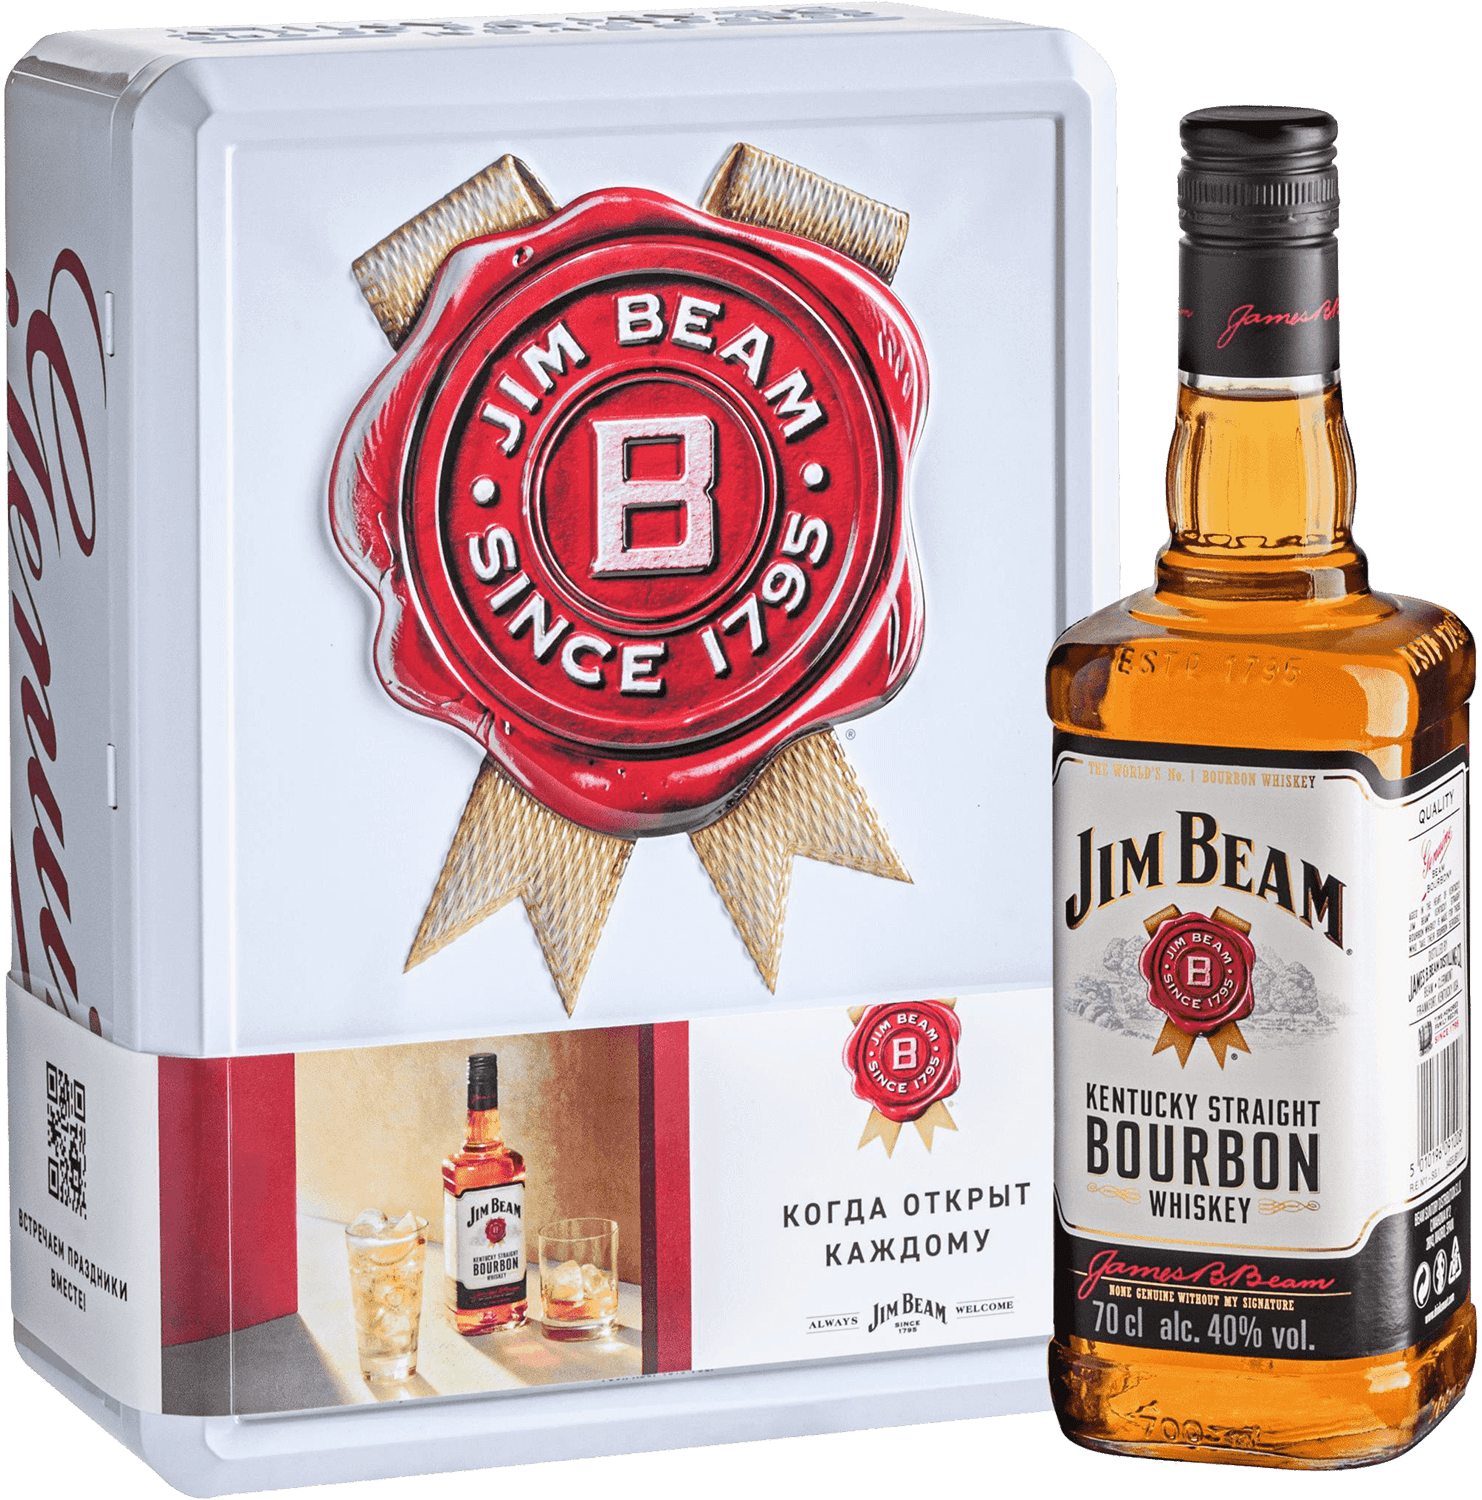 Jim Beam Kentucky Straight Bourbon Whiskey (gift box with 2 glasses) woodford reserve kentucky straight bourbon whiskey gift box with glass